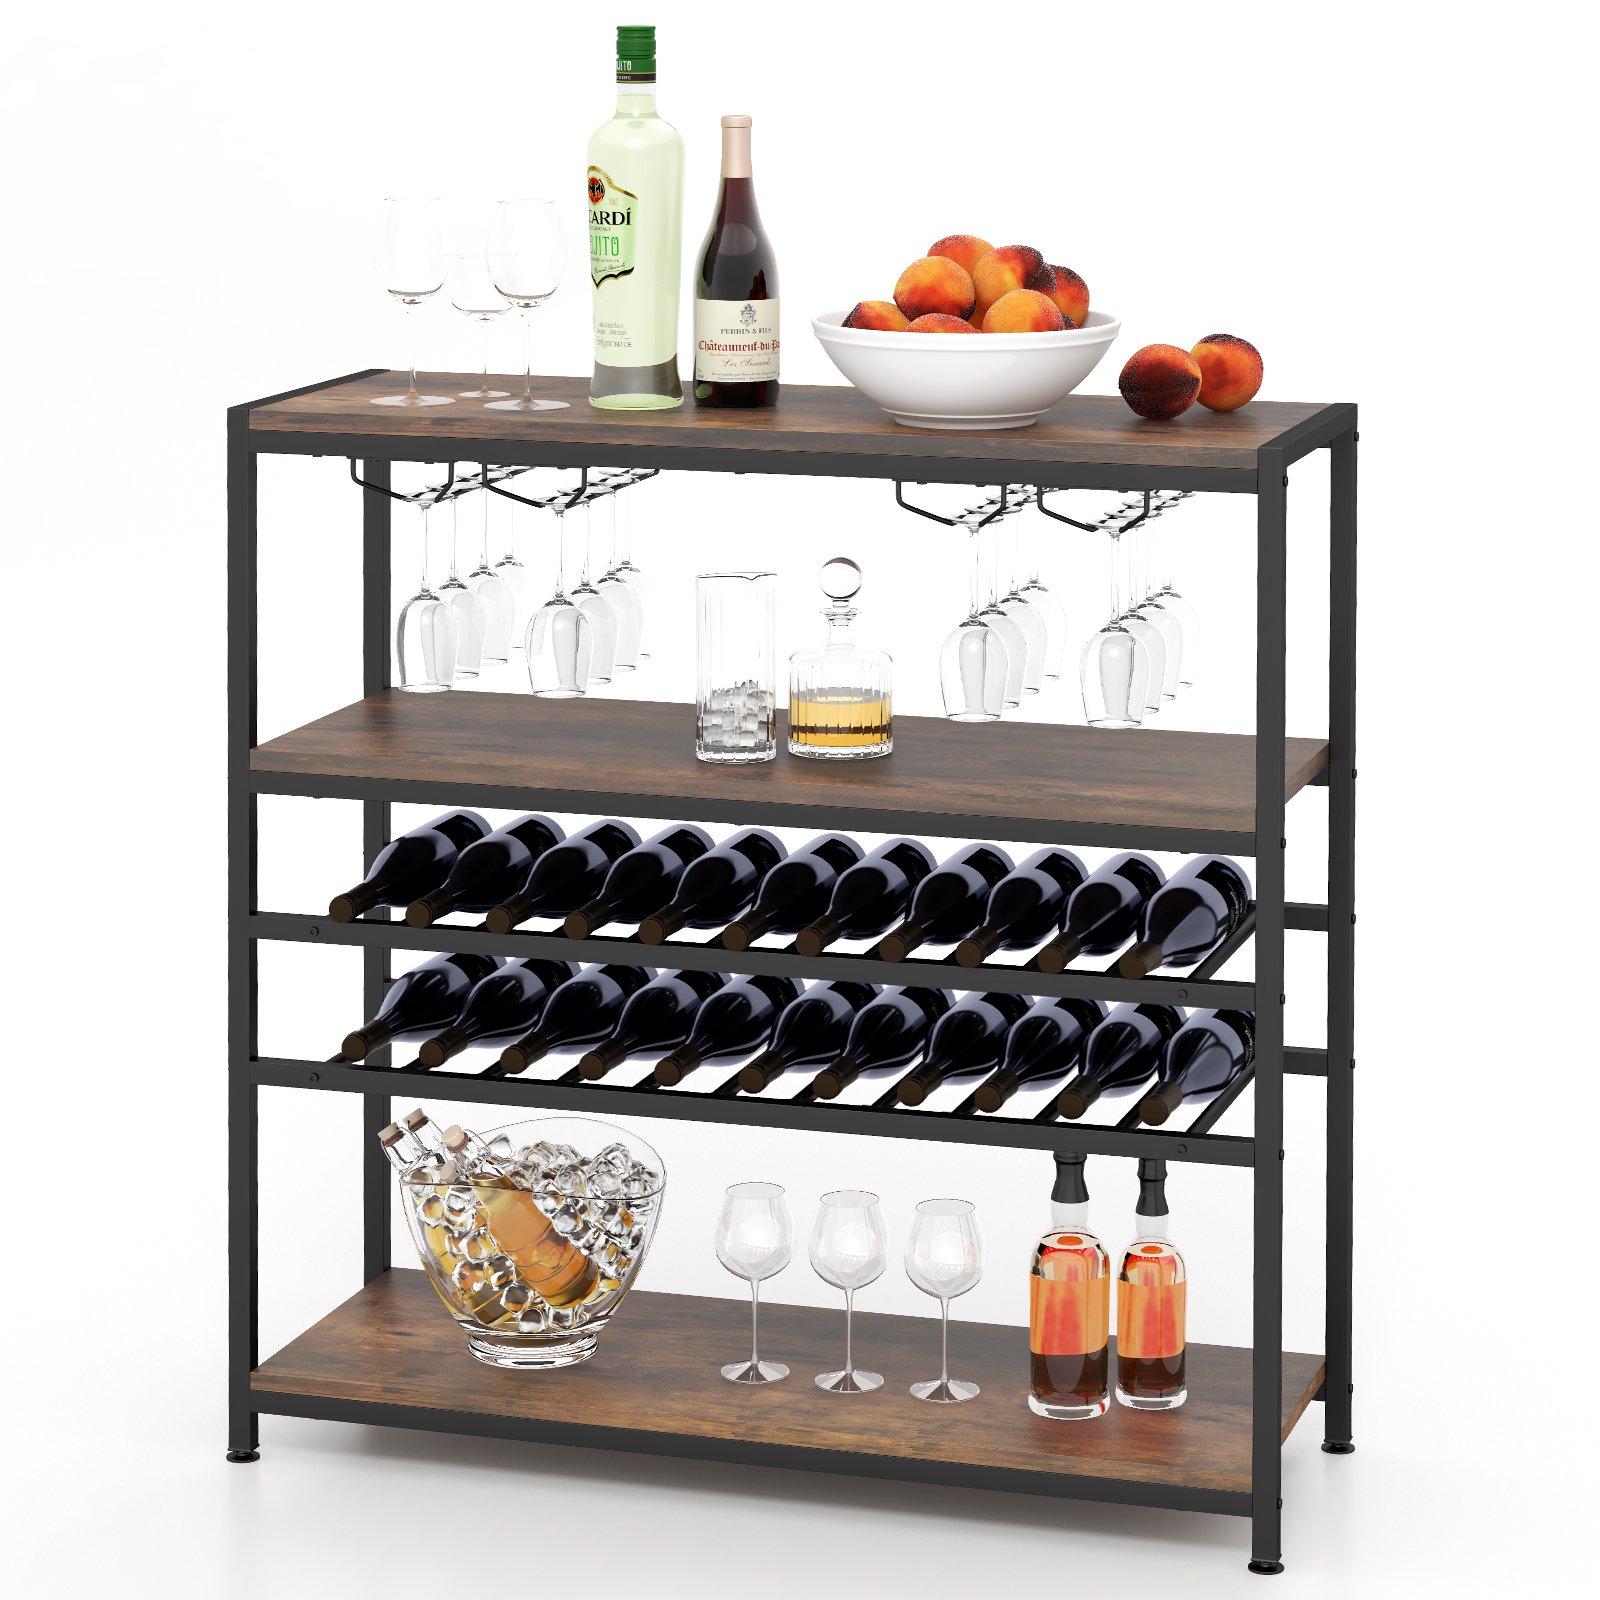 5-tier Wine Rack Table Freestanding Bar Wine Racks With 4 Rows of Glass Holders